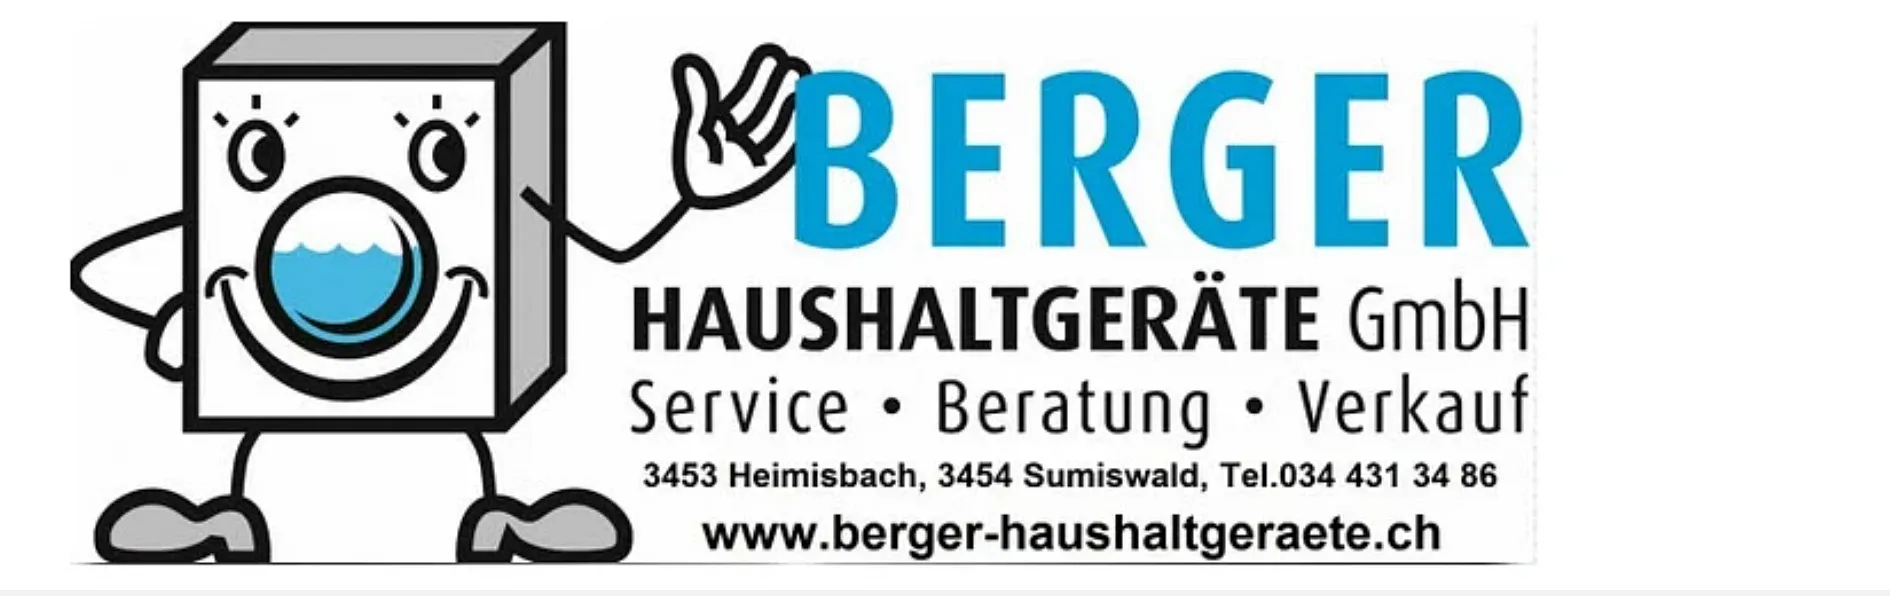 Berger Haushaltgeräte GmbH